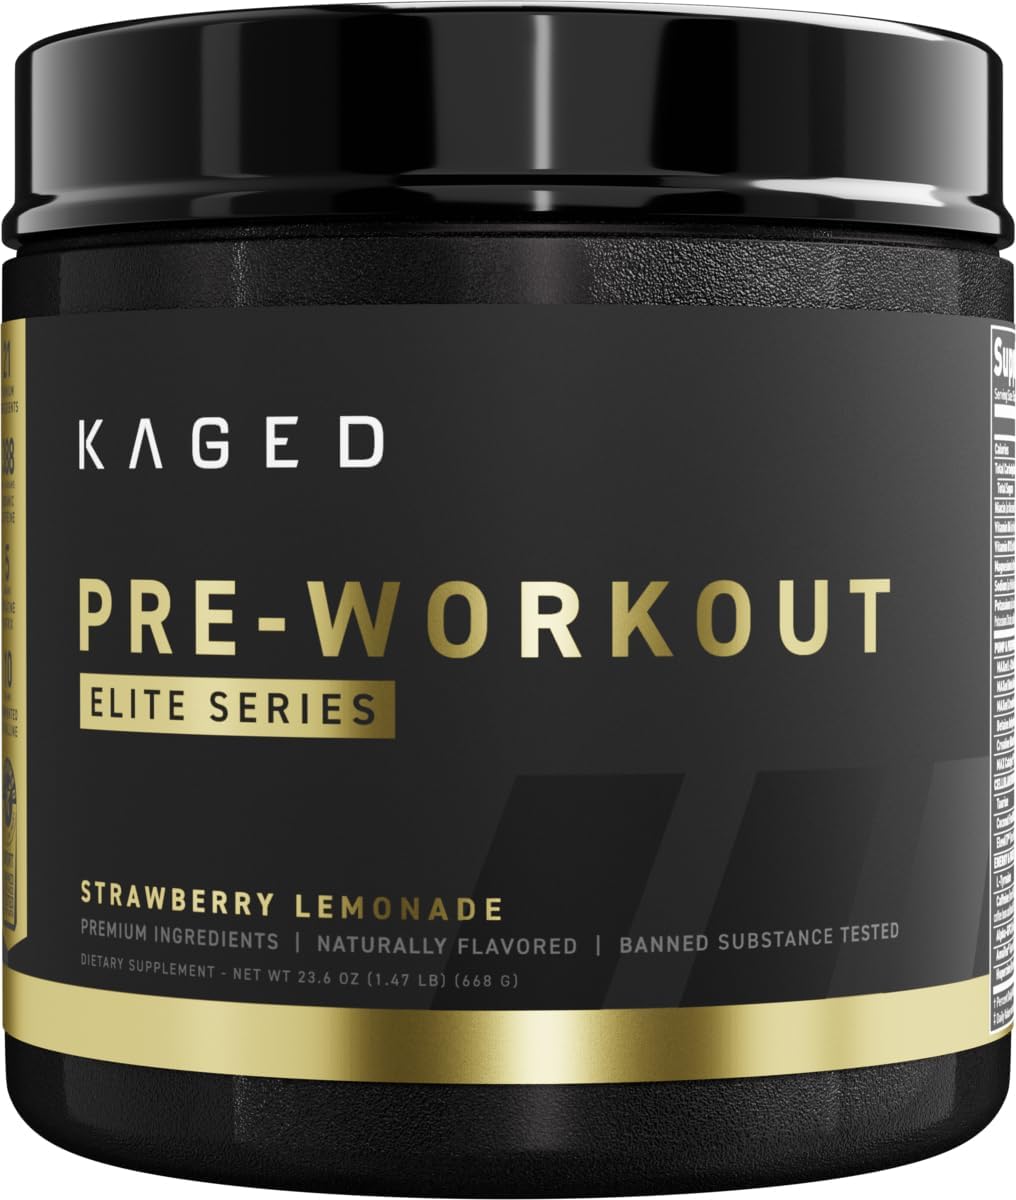 Kaged Pre Workout Powder Pre-Workout Elite | High Stimulant for Energy